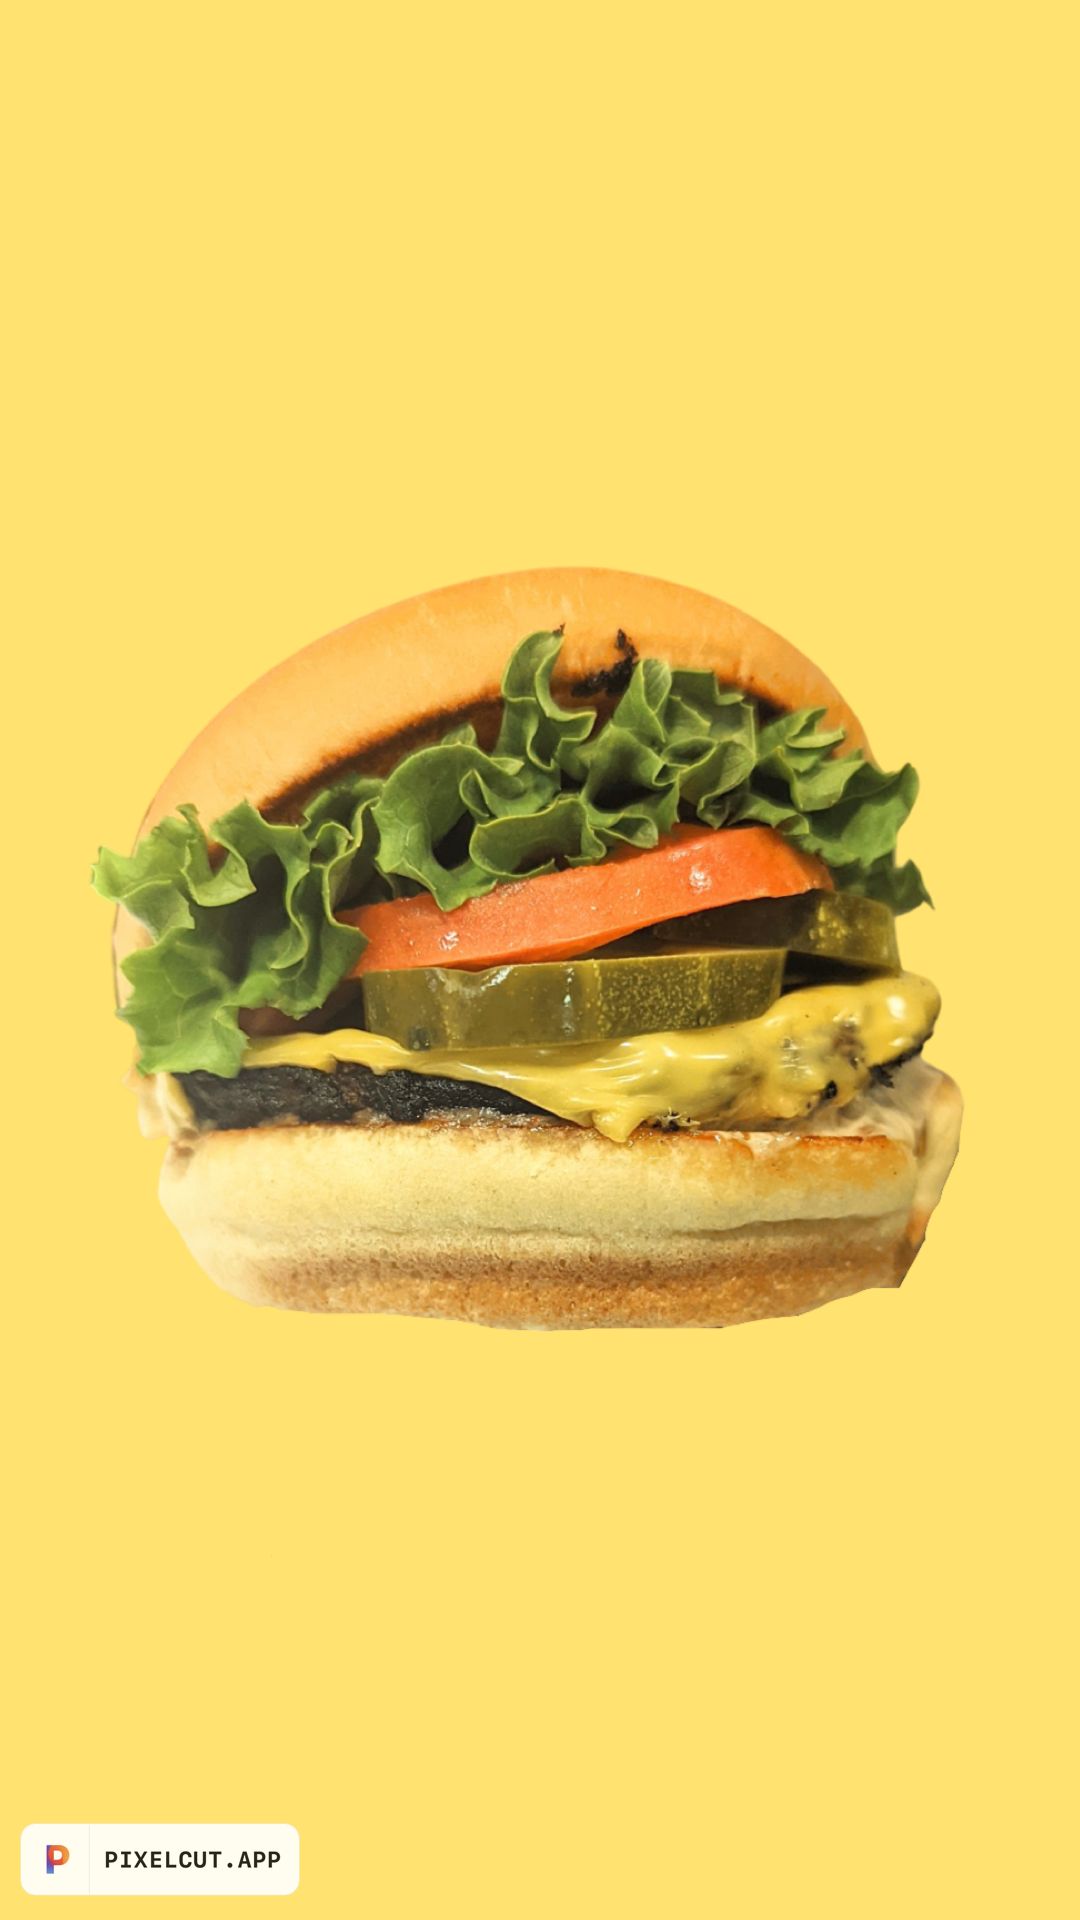 Vegan Single Cheeseburger